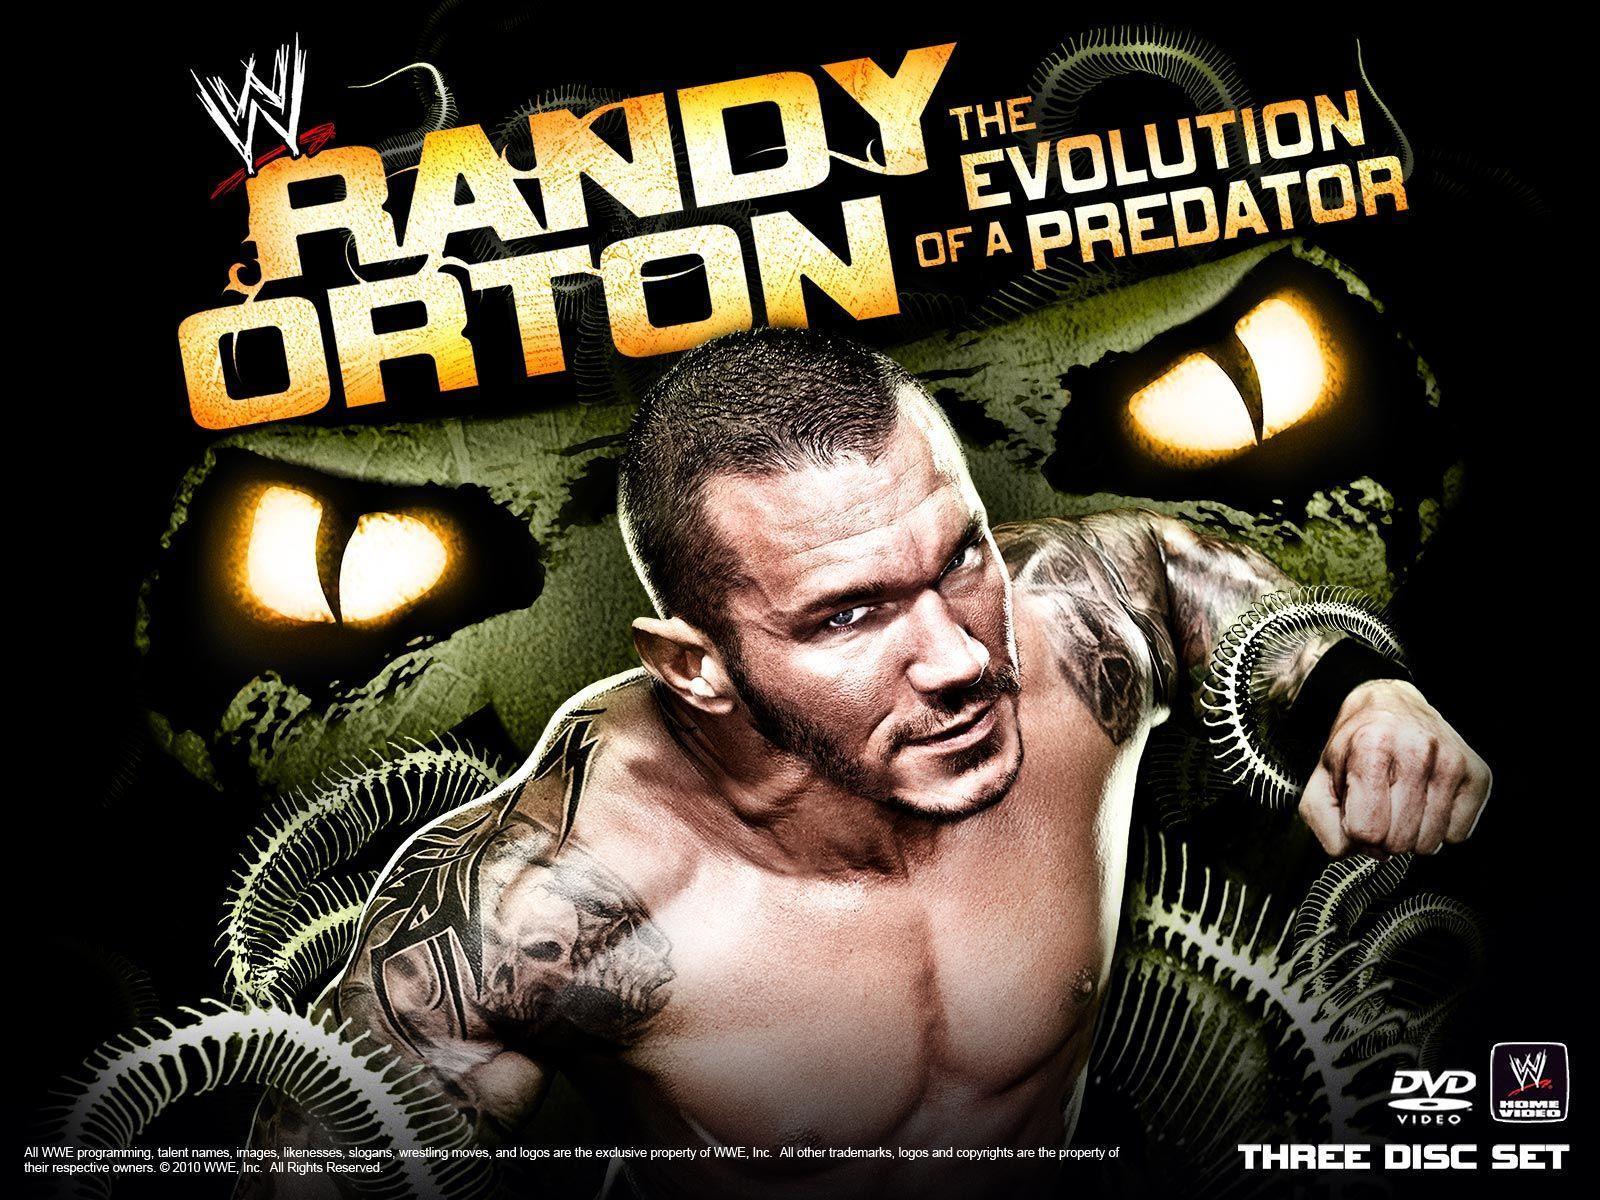 WWE Releases Wallpaper of Randy Orton: Evolution of a Predator DVD